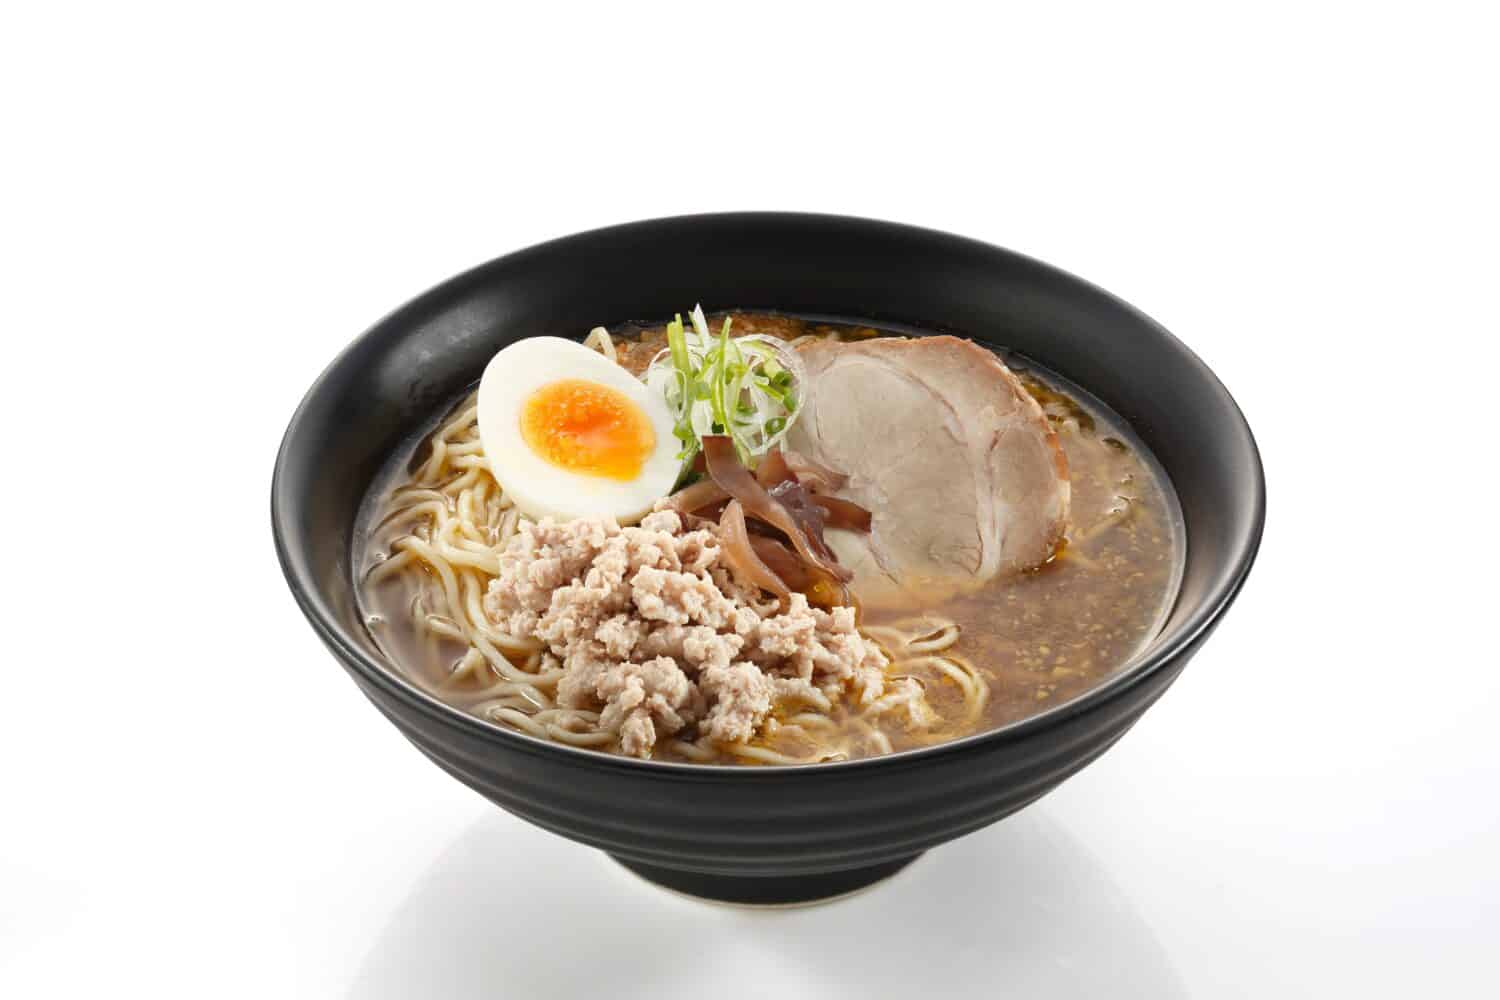 Shoyu- Tonkotsu Ramen (Ramen noodles in pork and shoyu broth soup) in a bowl on white background.